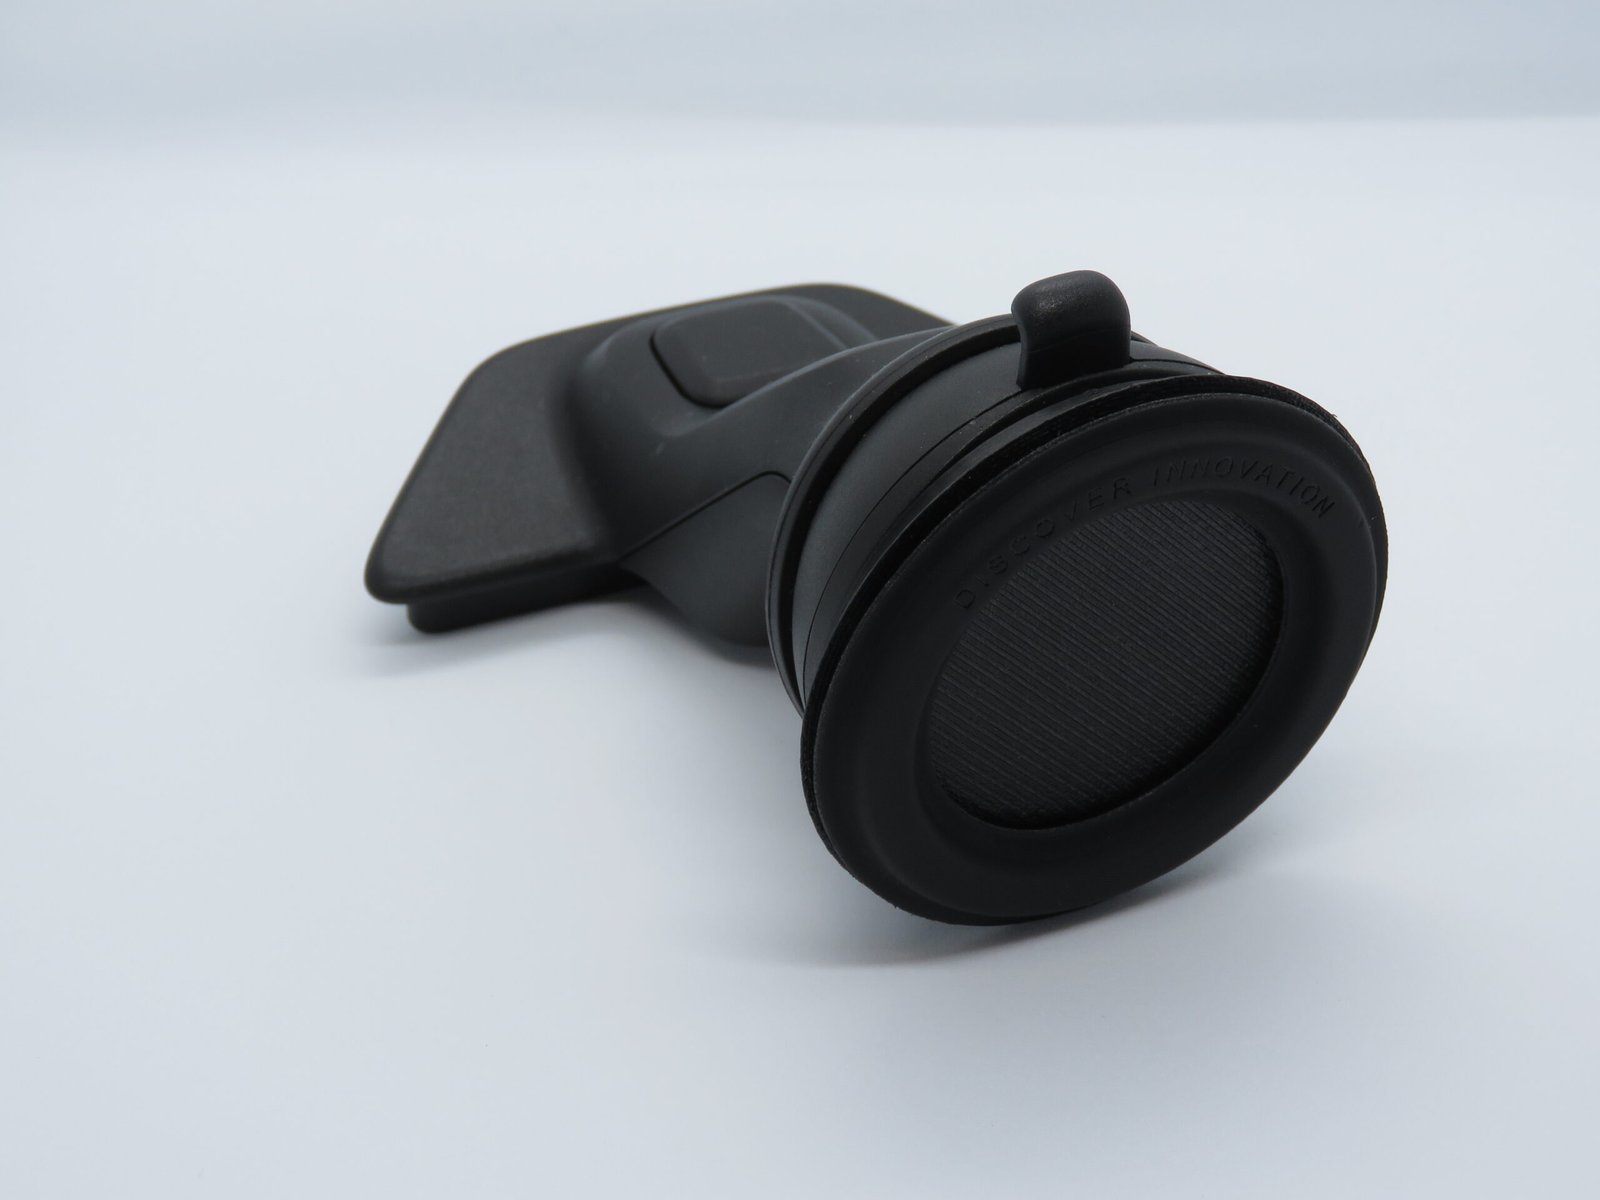 Mii/VW Citigo Garmin/Navigon Sat Phone Adapter – Custom Dash Mounts